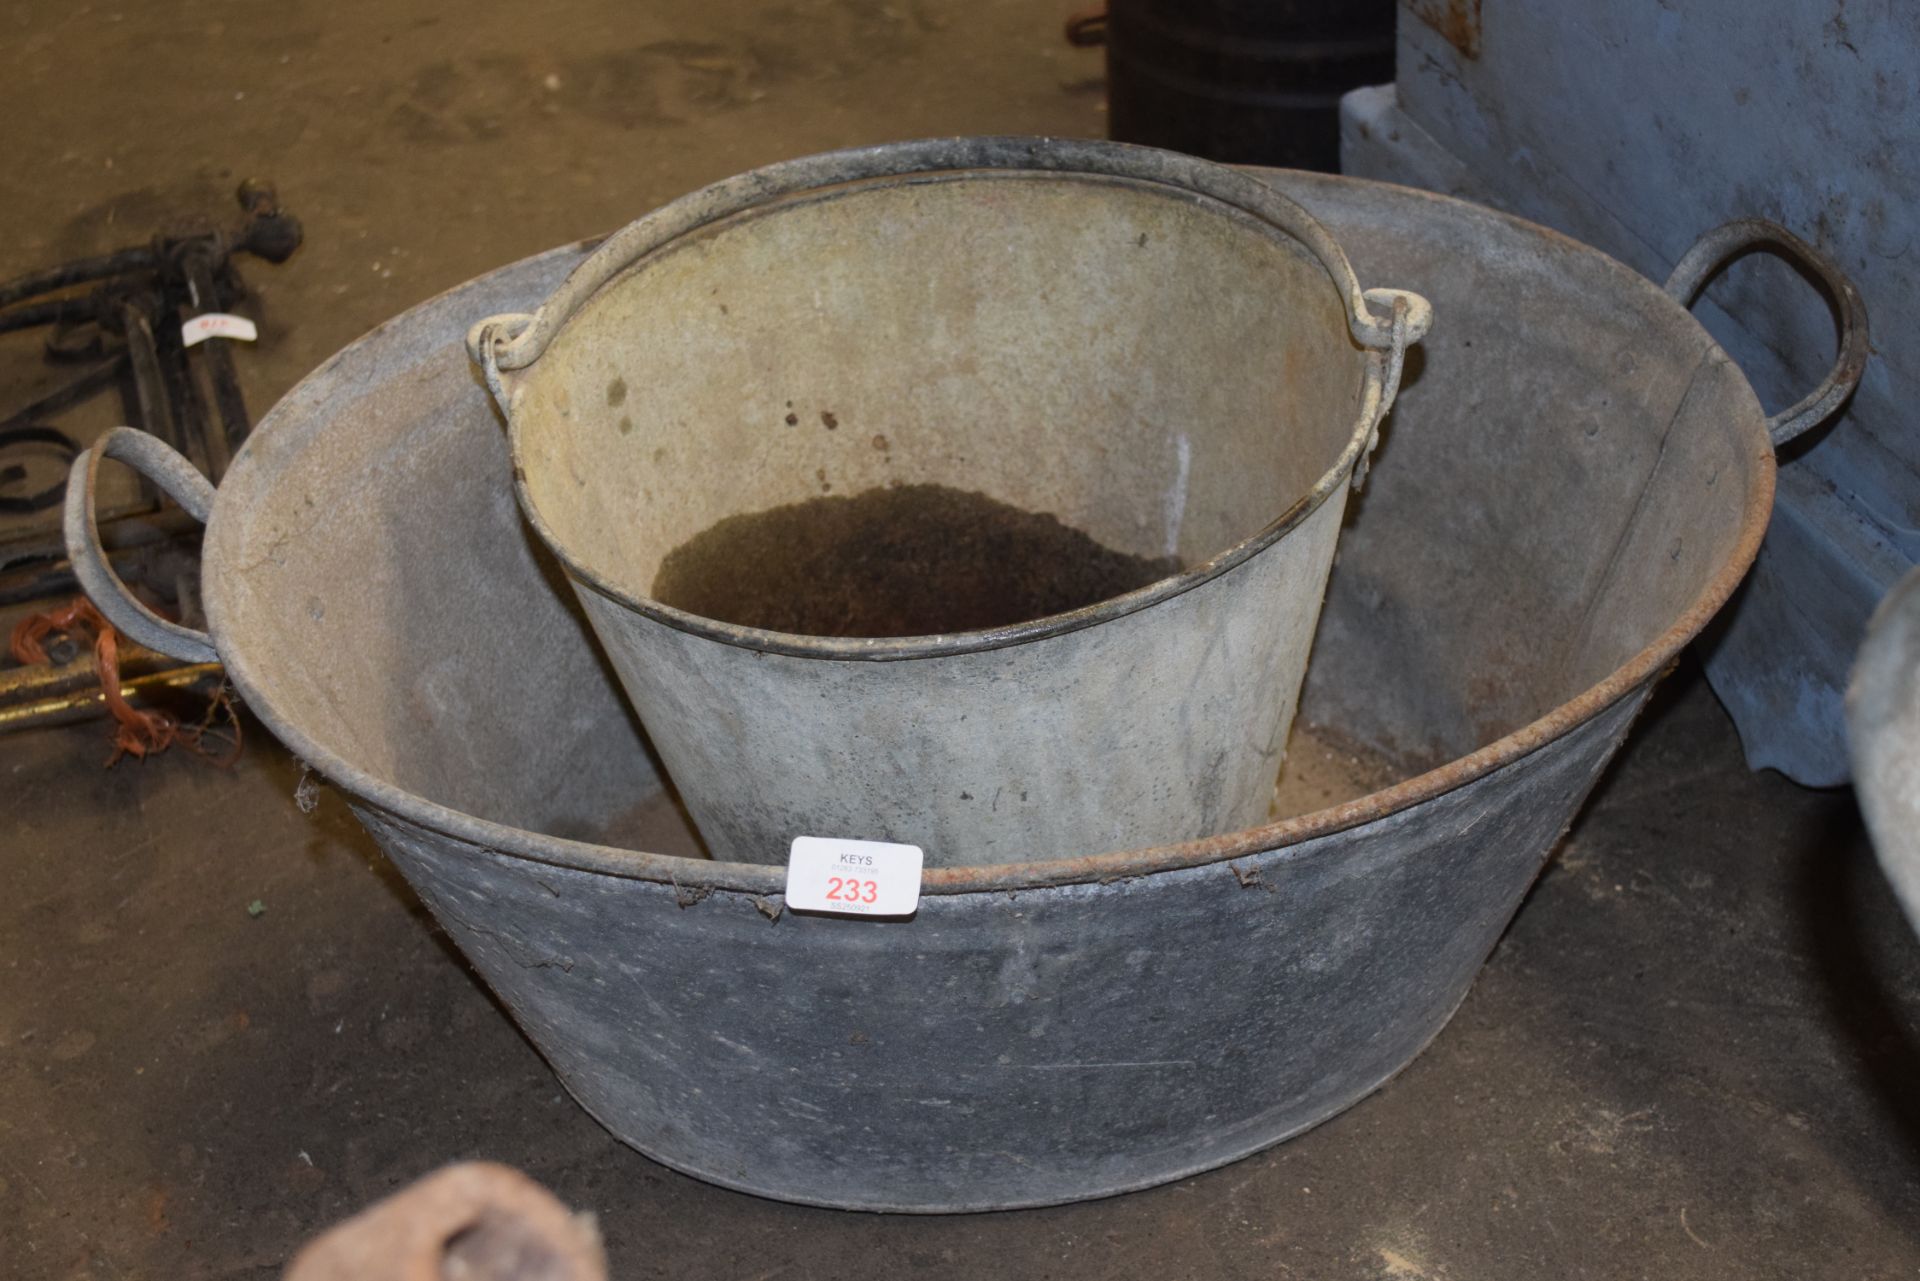 Galvanised bath and bucket